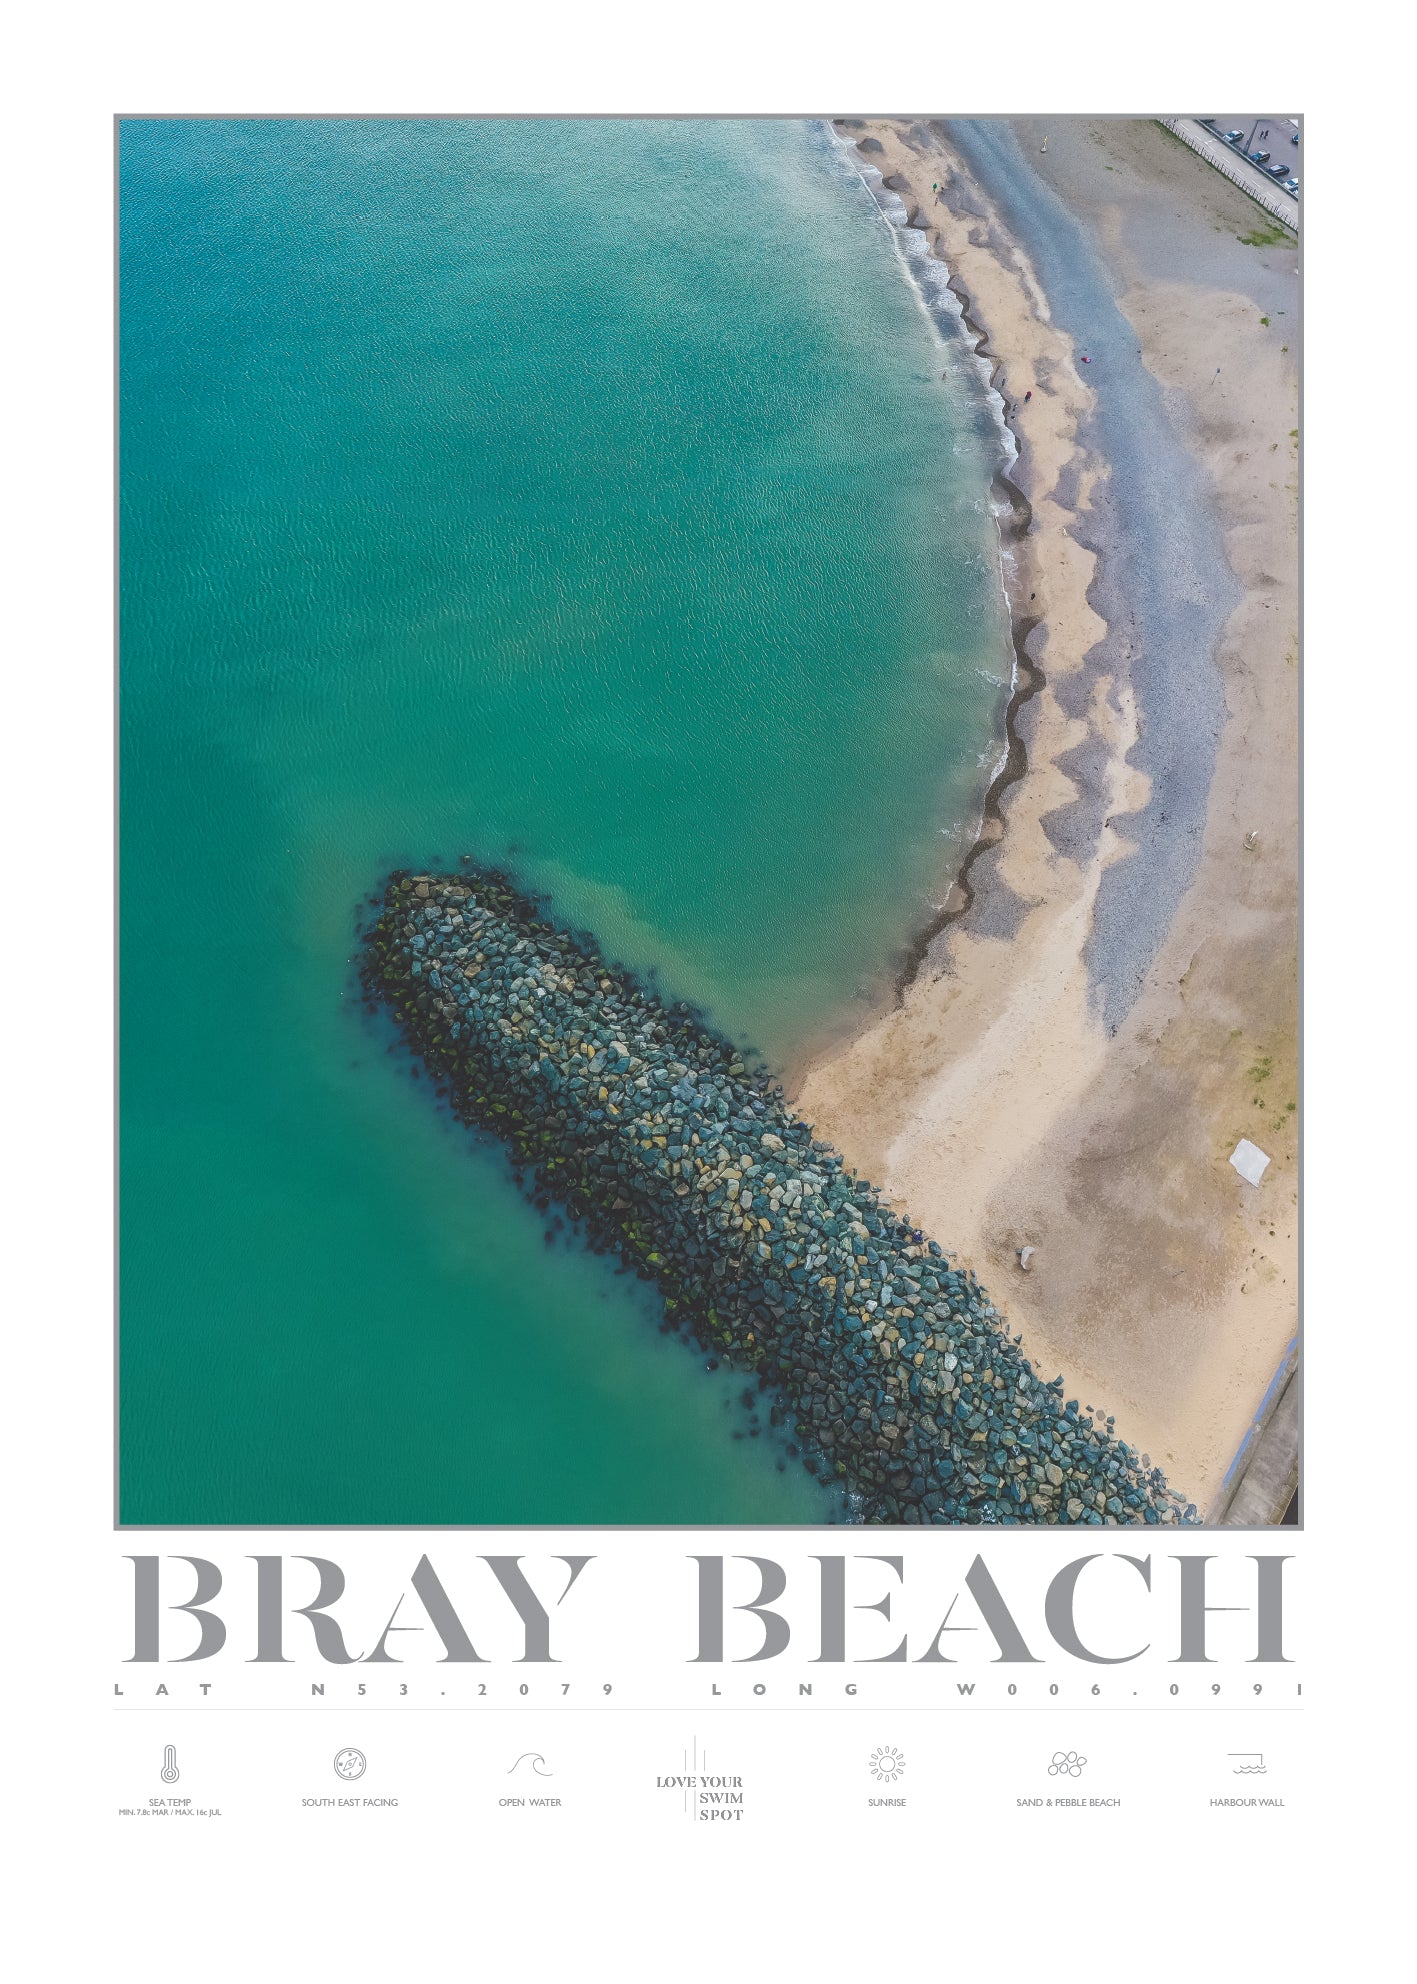 BRAY BEACH CO WICKLOW